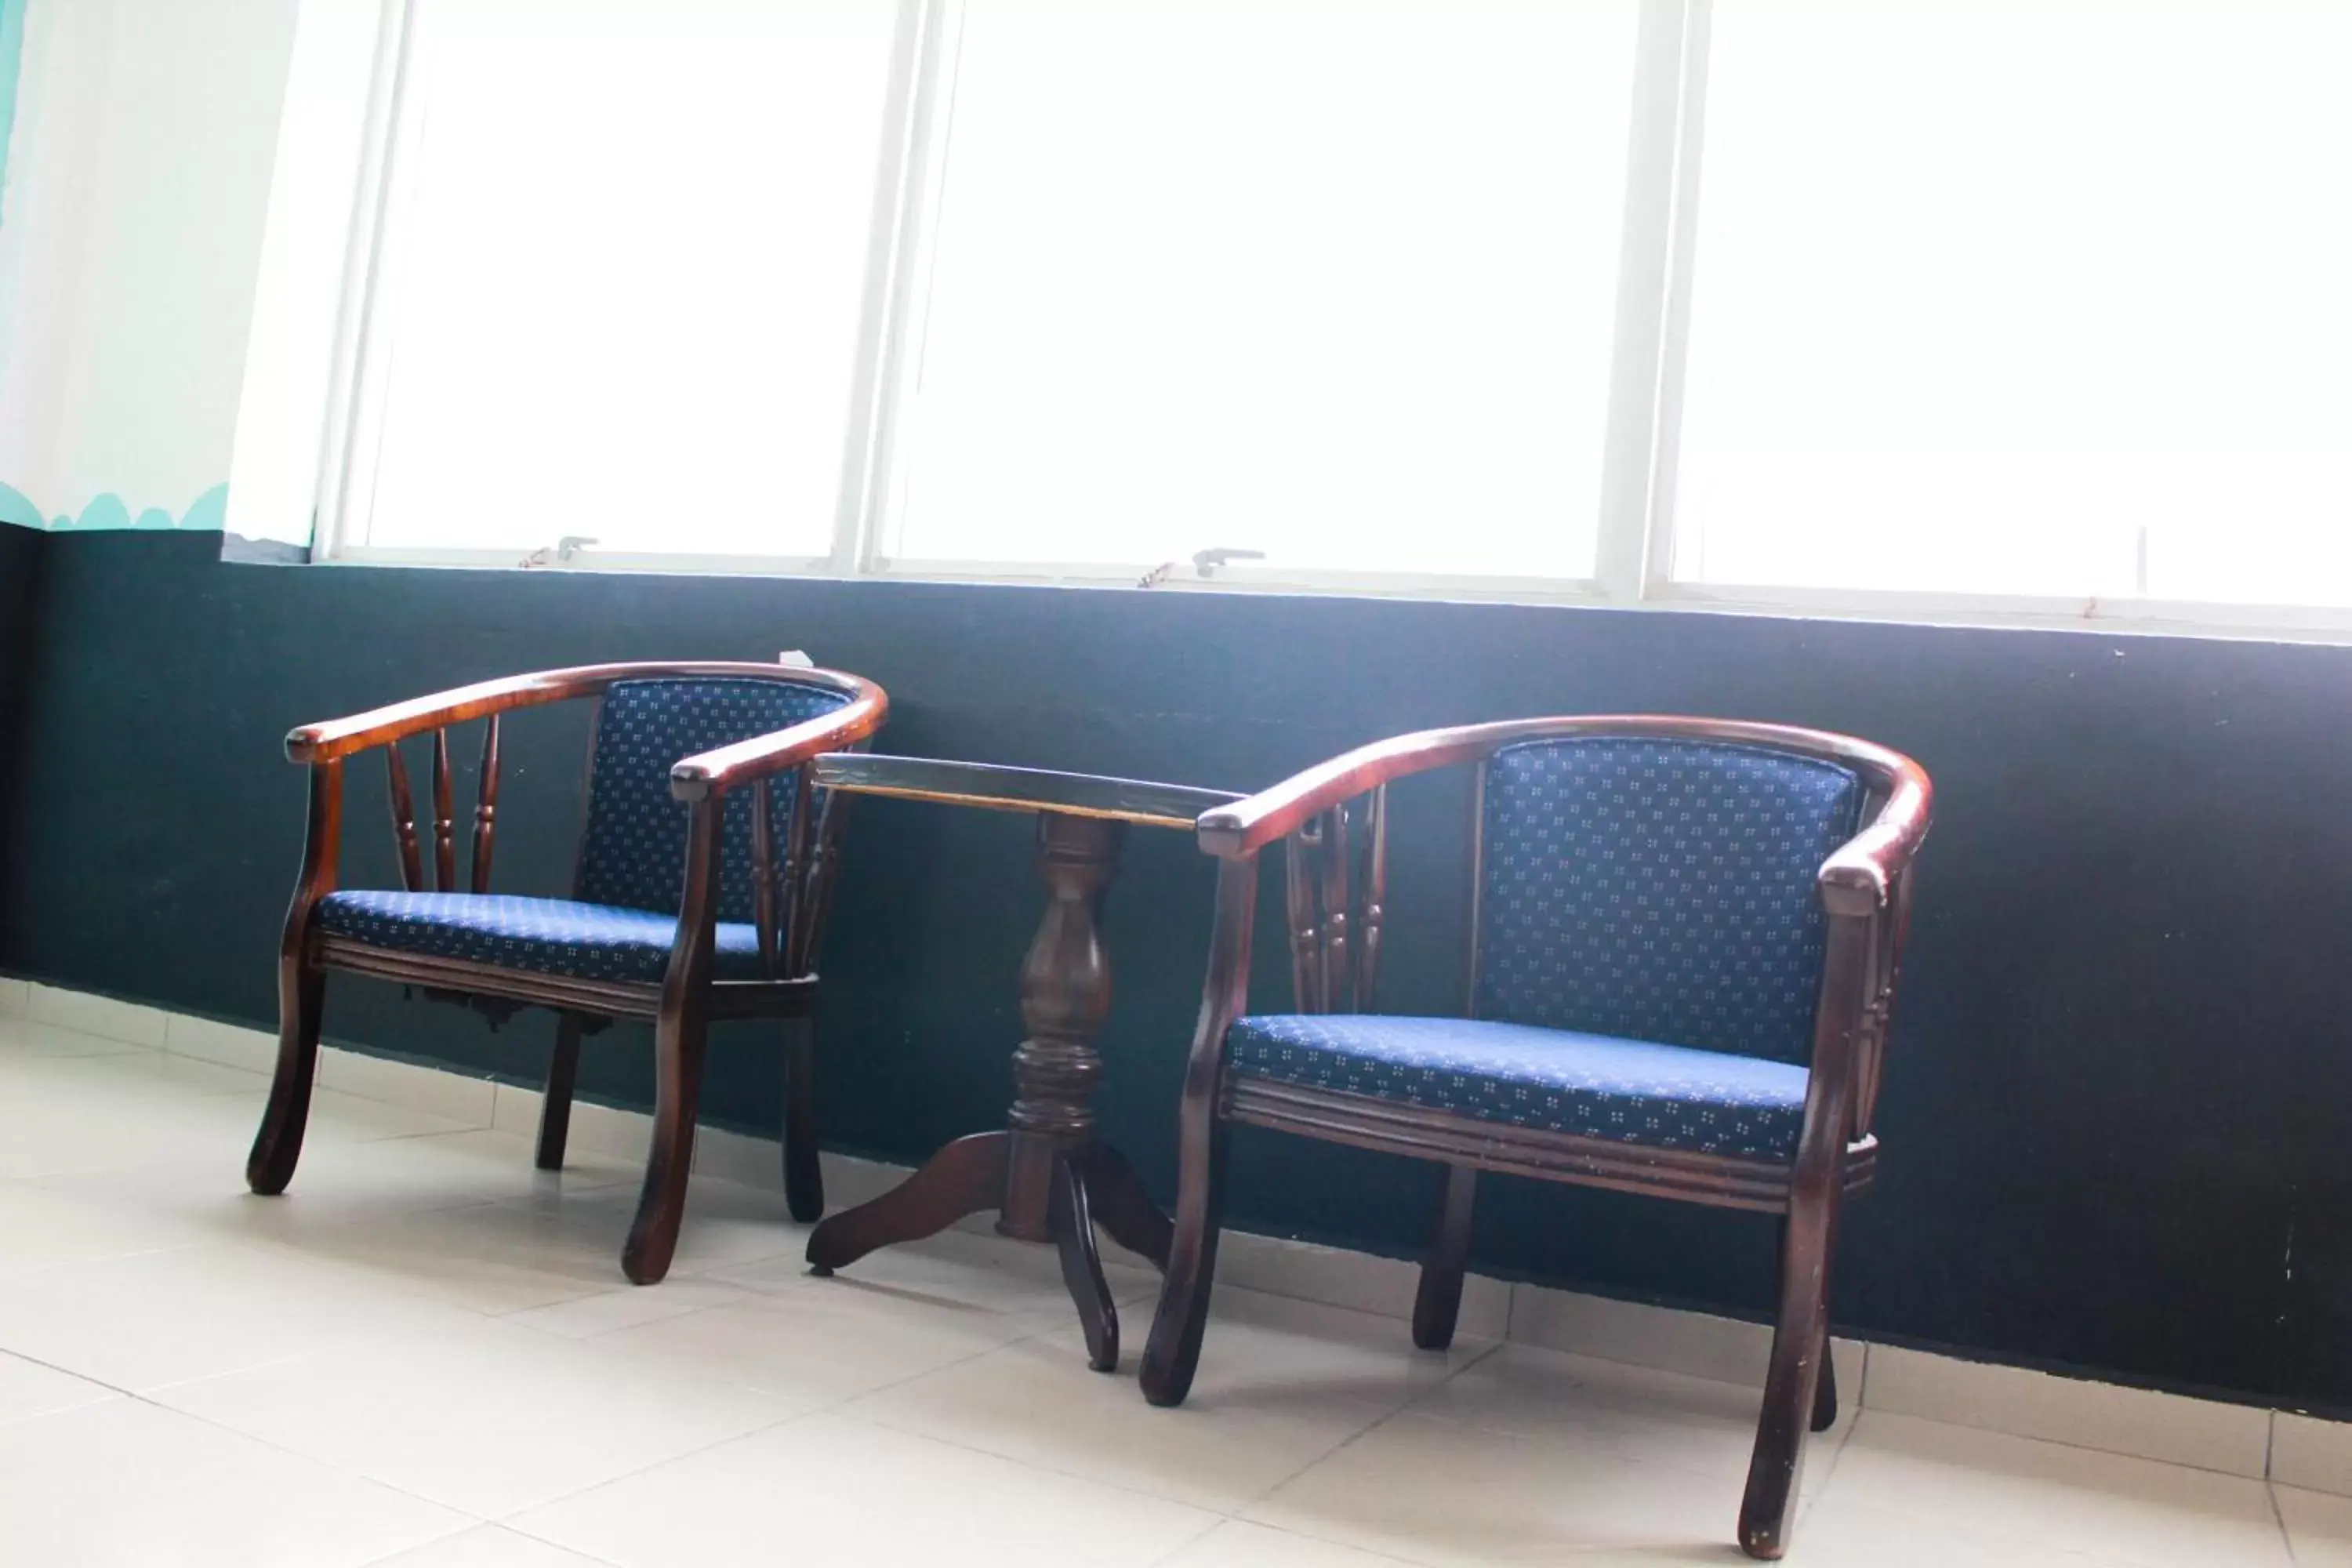 Other, Seating Area in Angsana Hotel Melaka